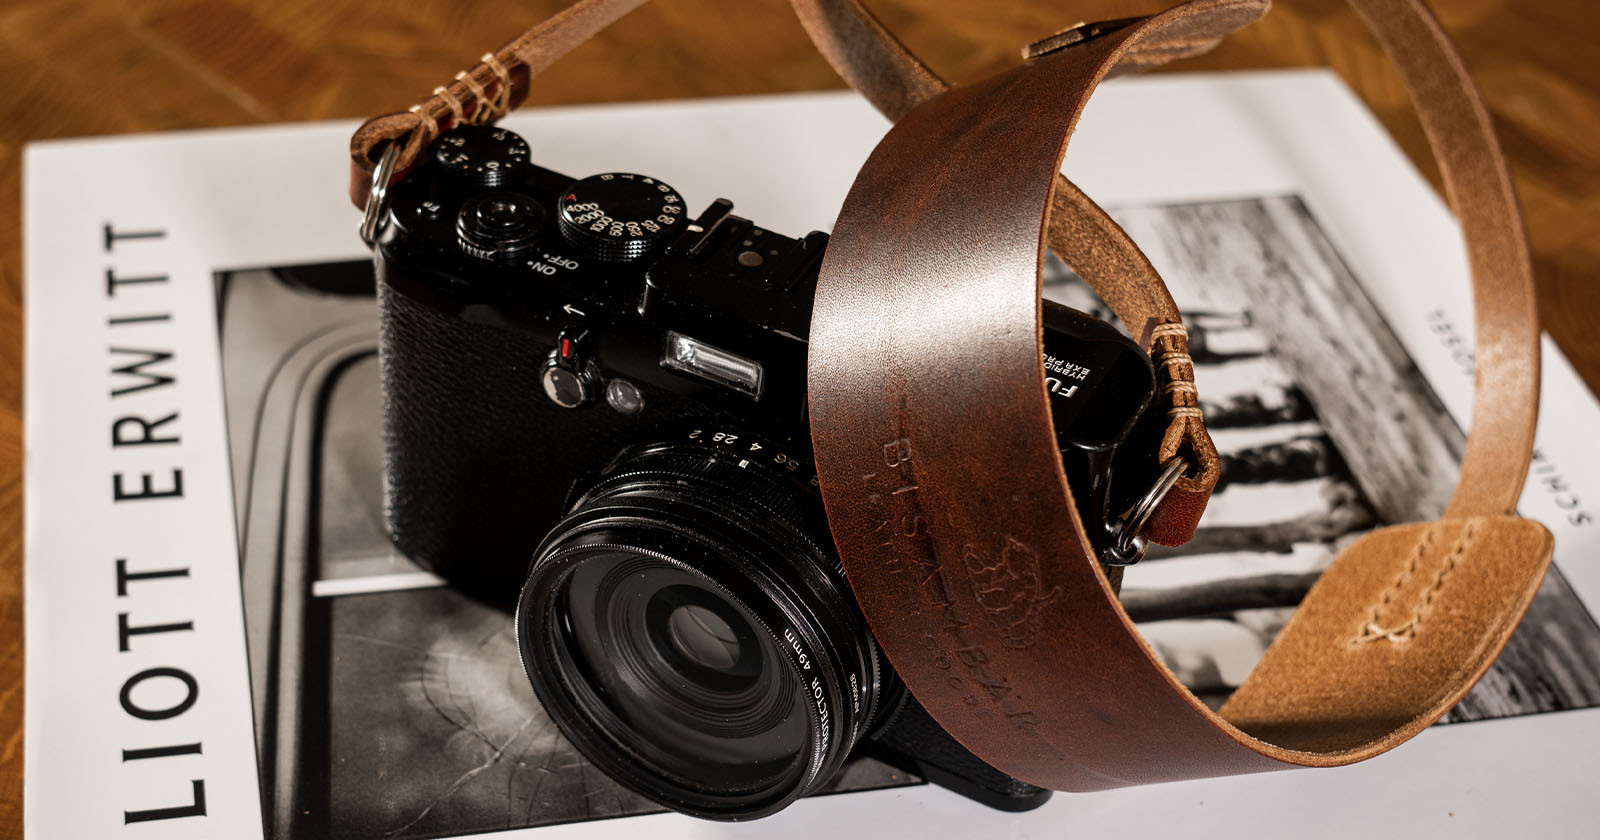  bisambar environmentally conscious leather camera strap company 